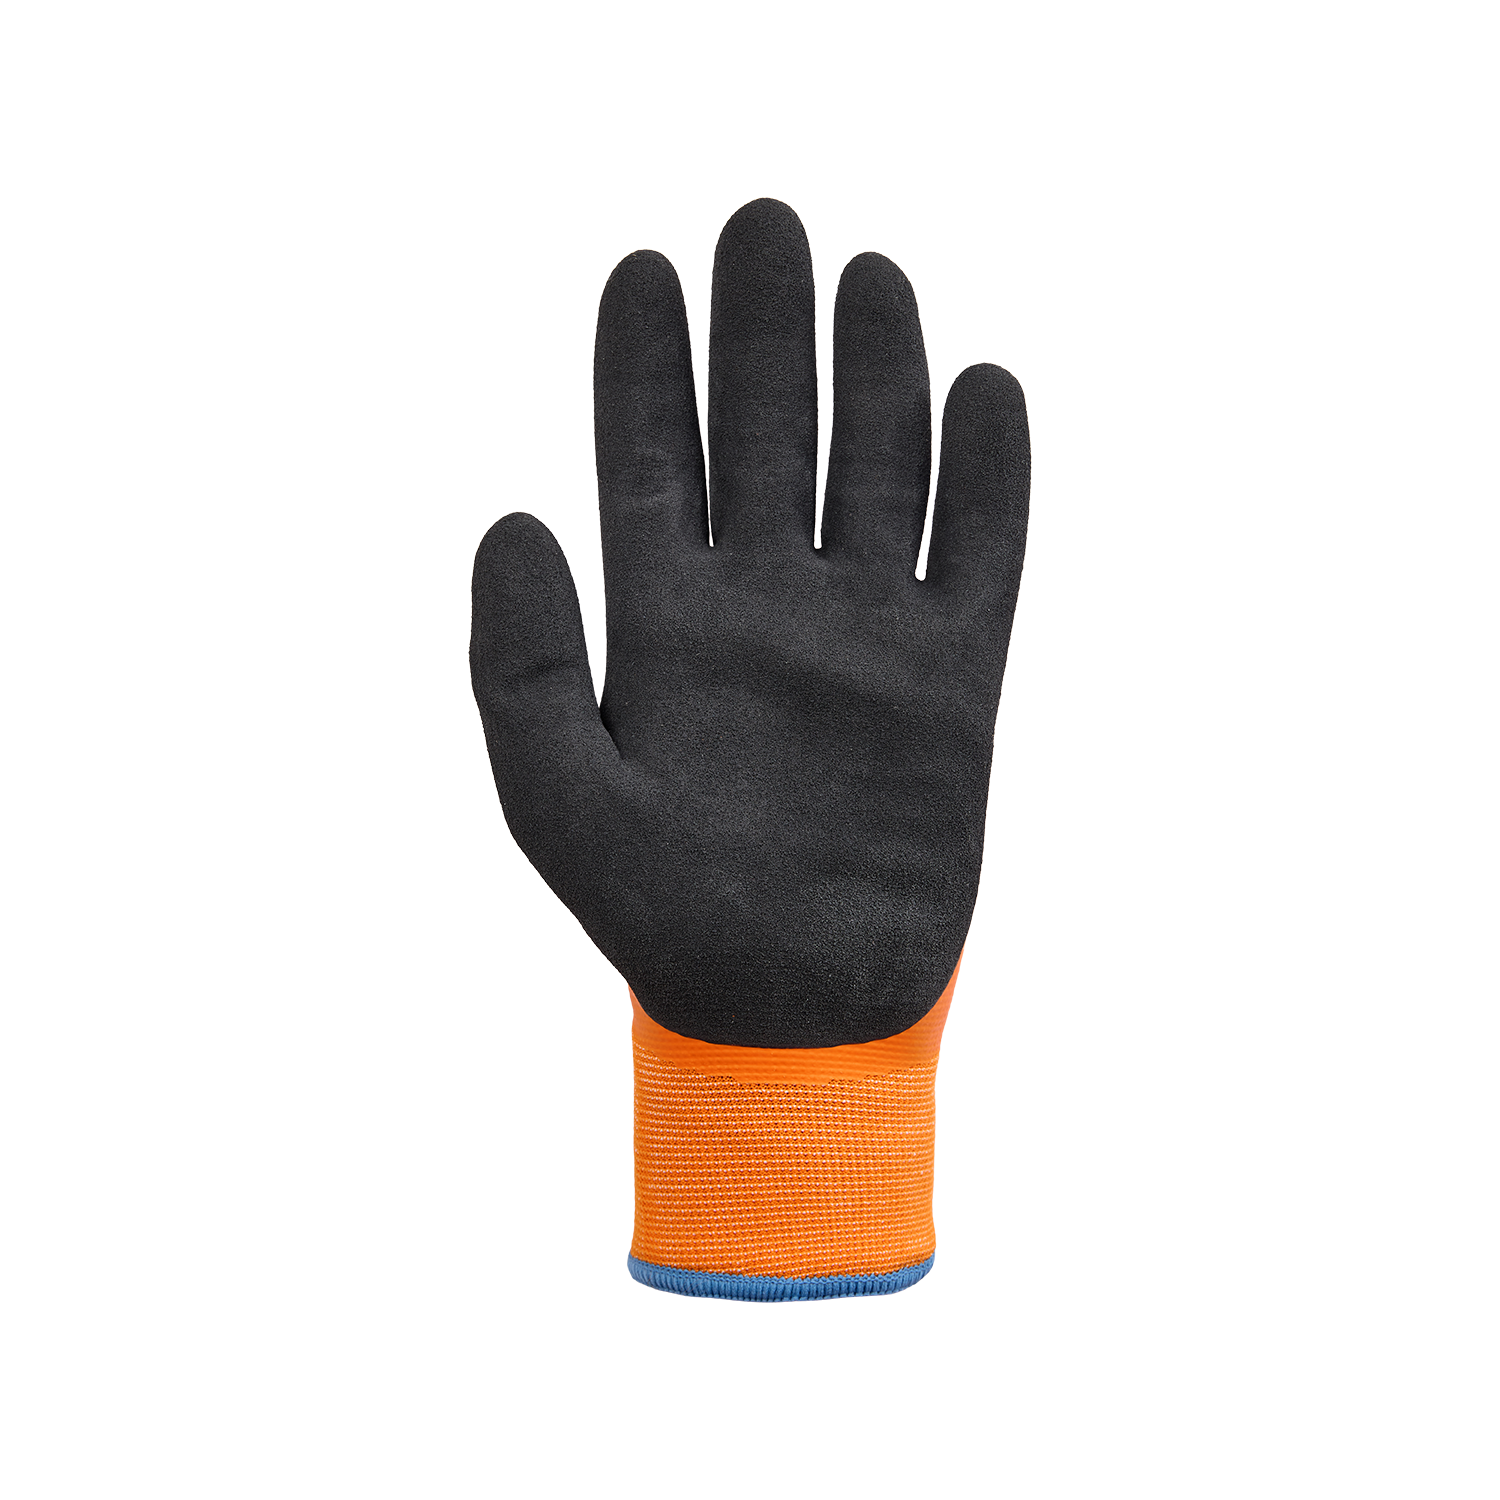 NORSE Arctic guantes de montaje de invierno impermeables talla 10